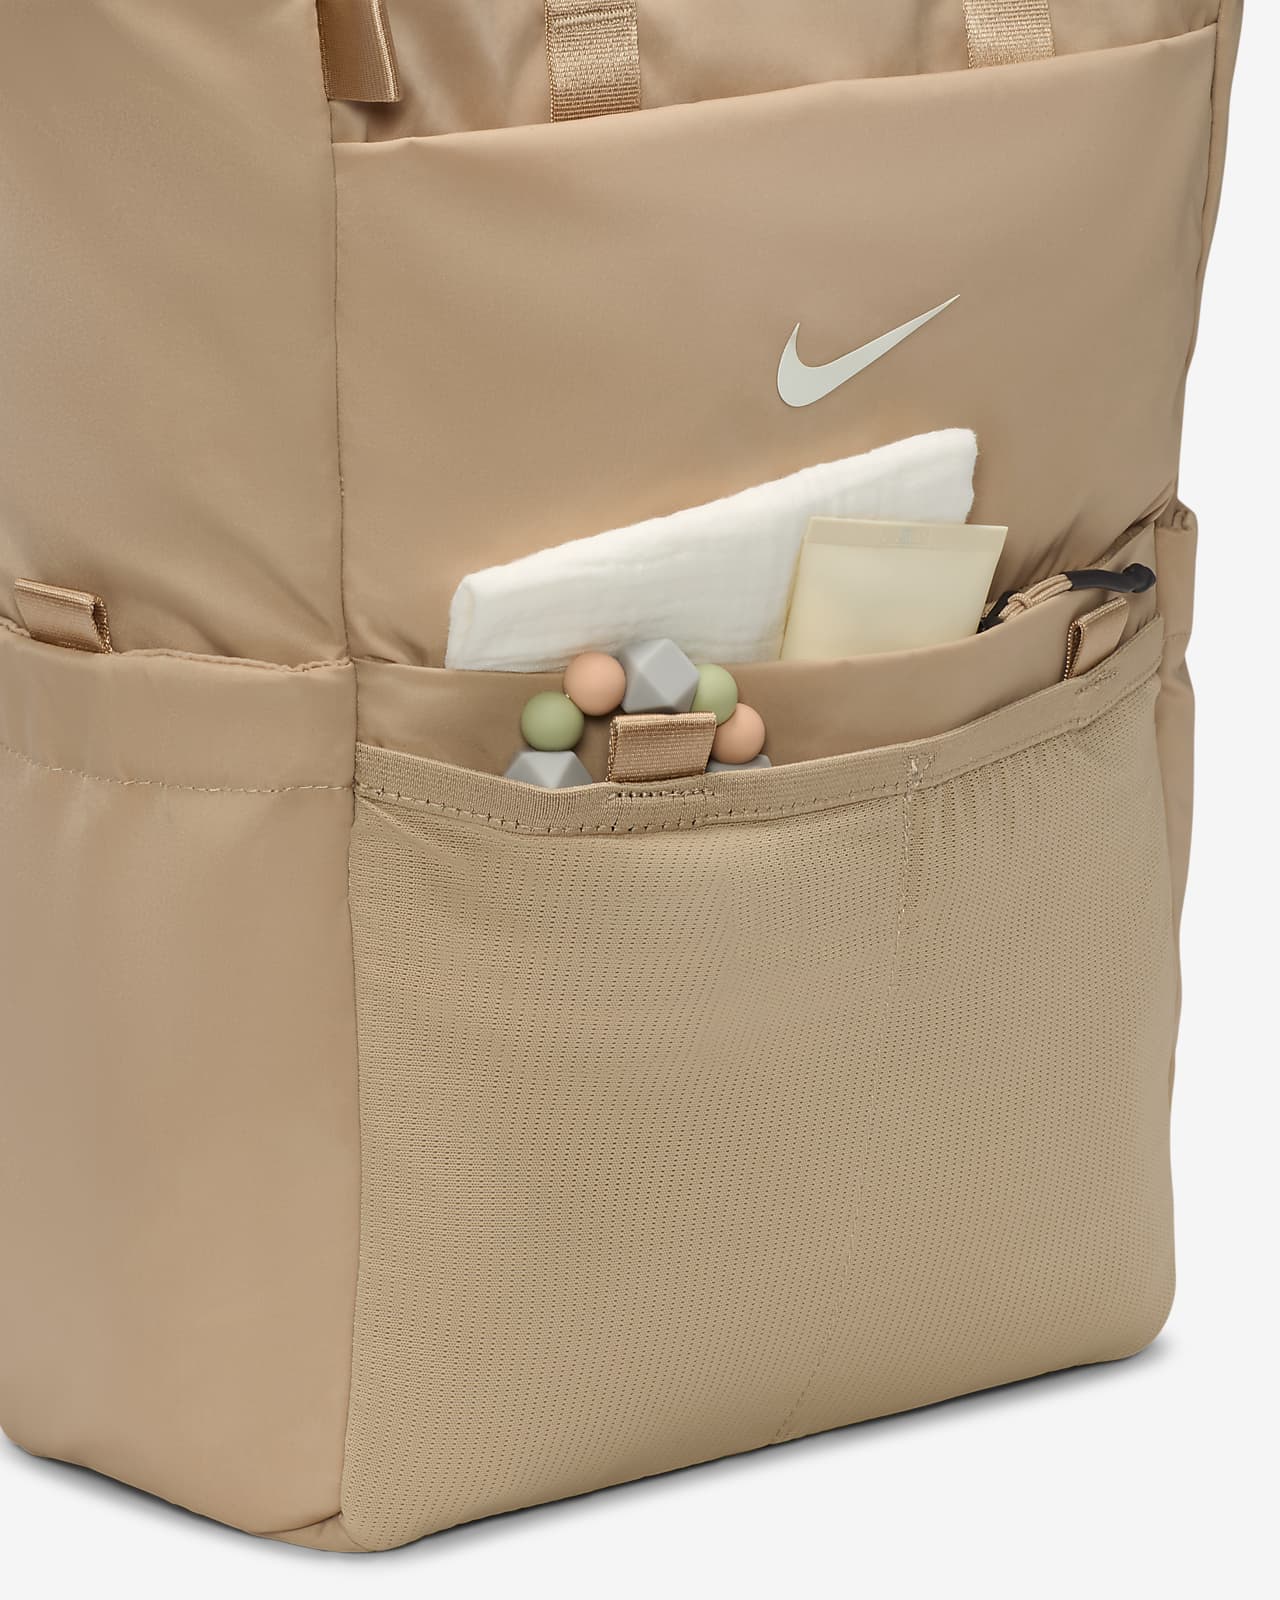 Nike Sling Bag Backpack Running Hiking Gym NWT *Buyer's Choice* FREE  SHIPPING | eBay